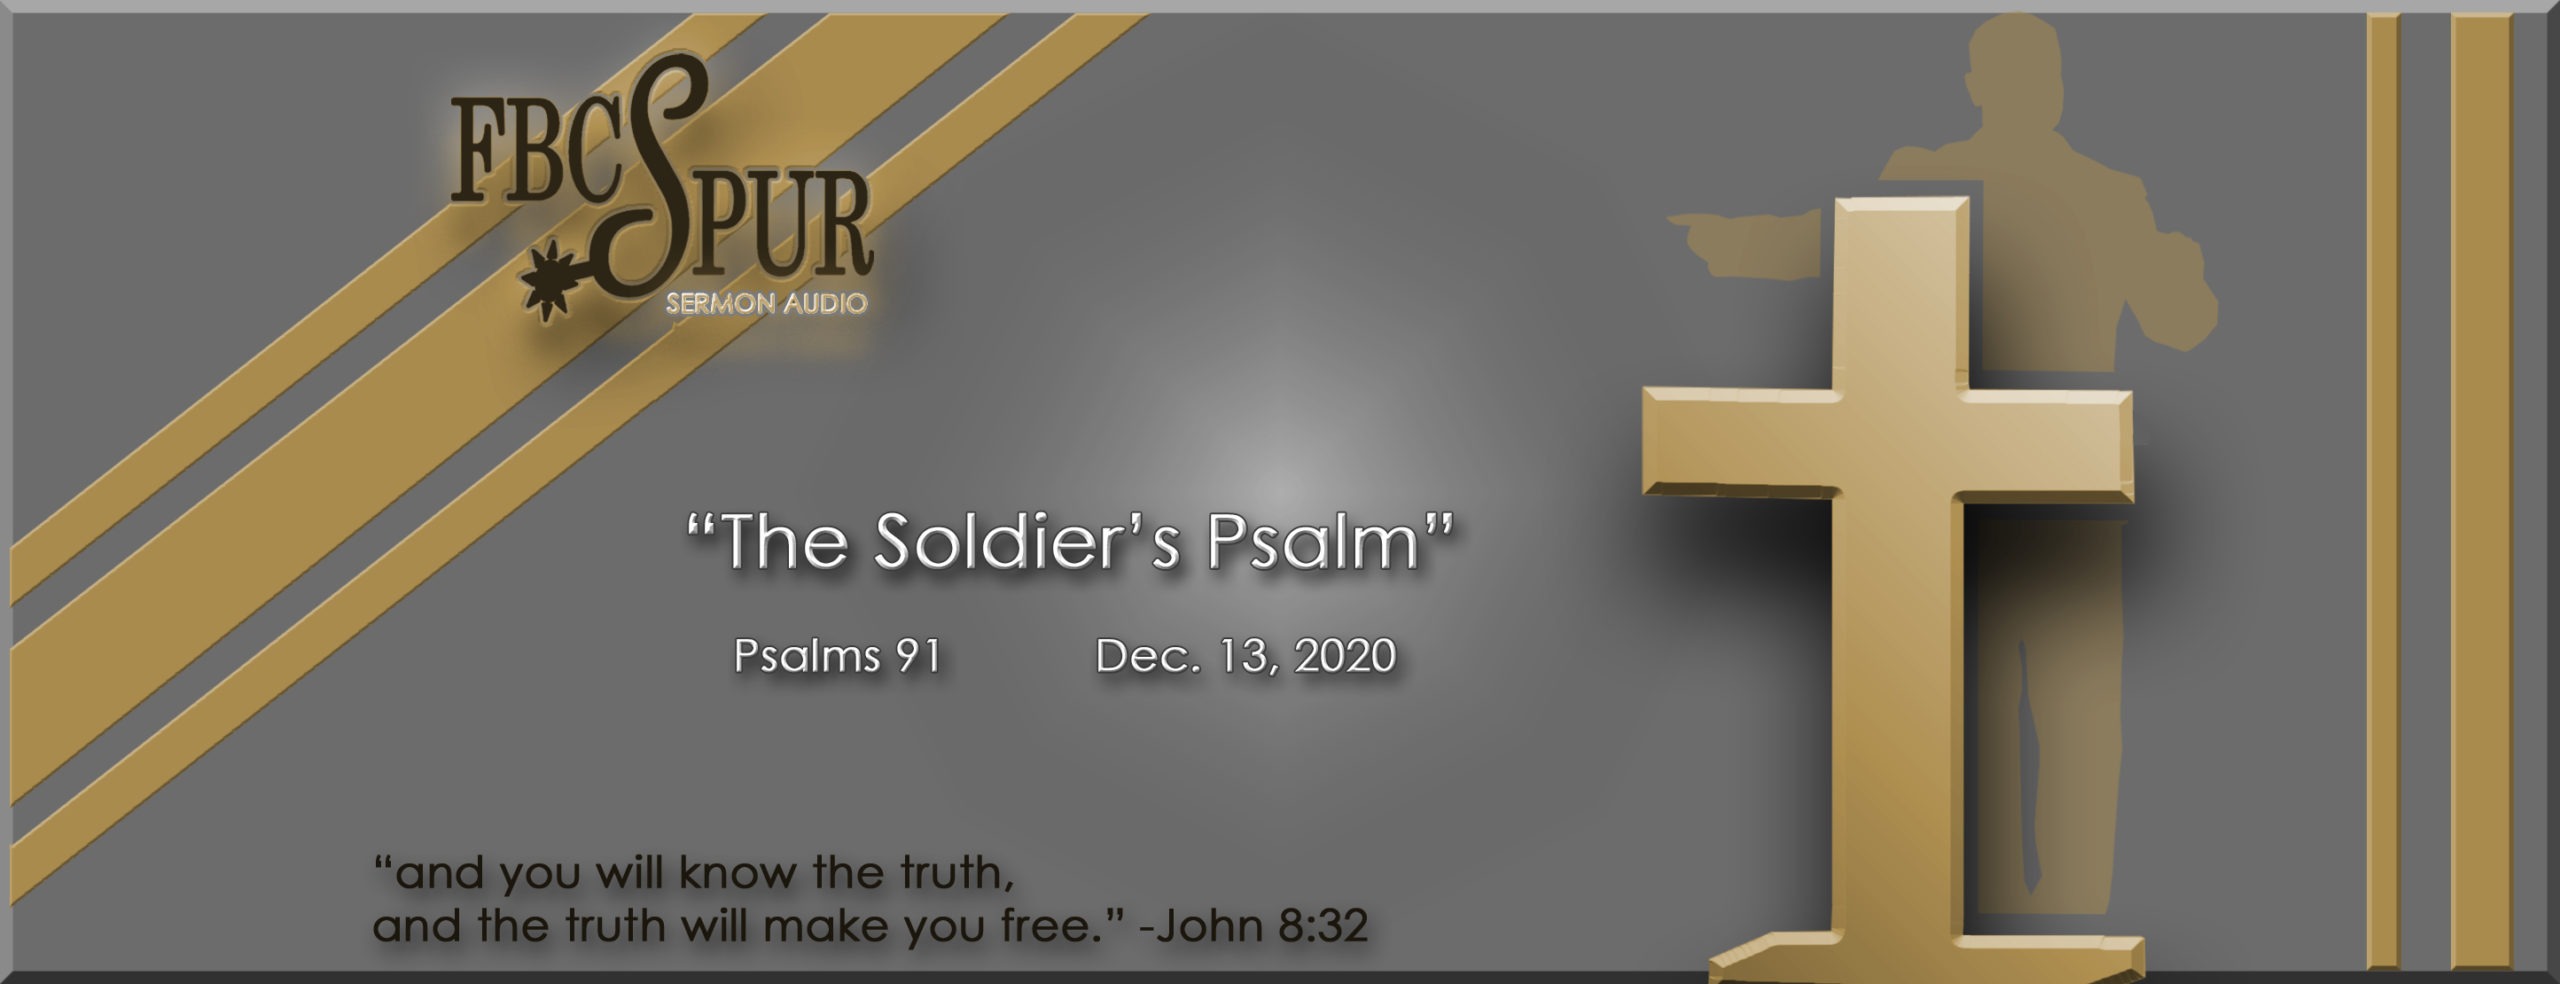 psalm 91 audio sermon